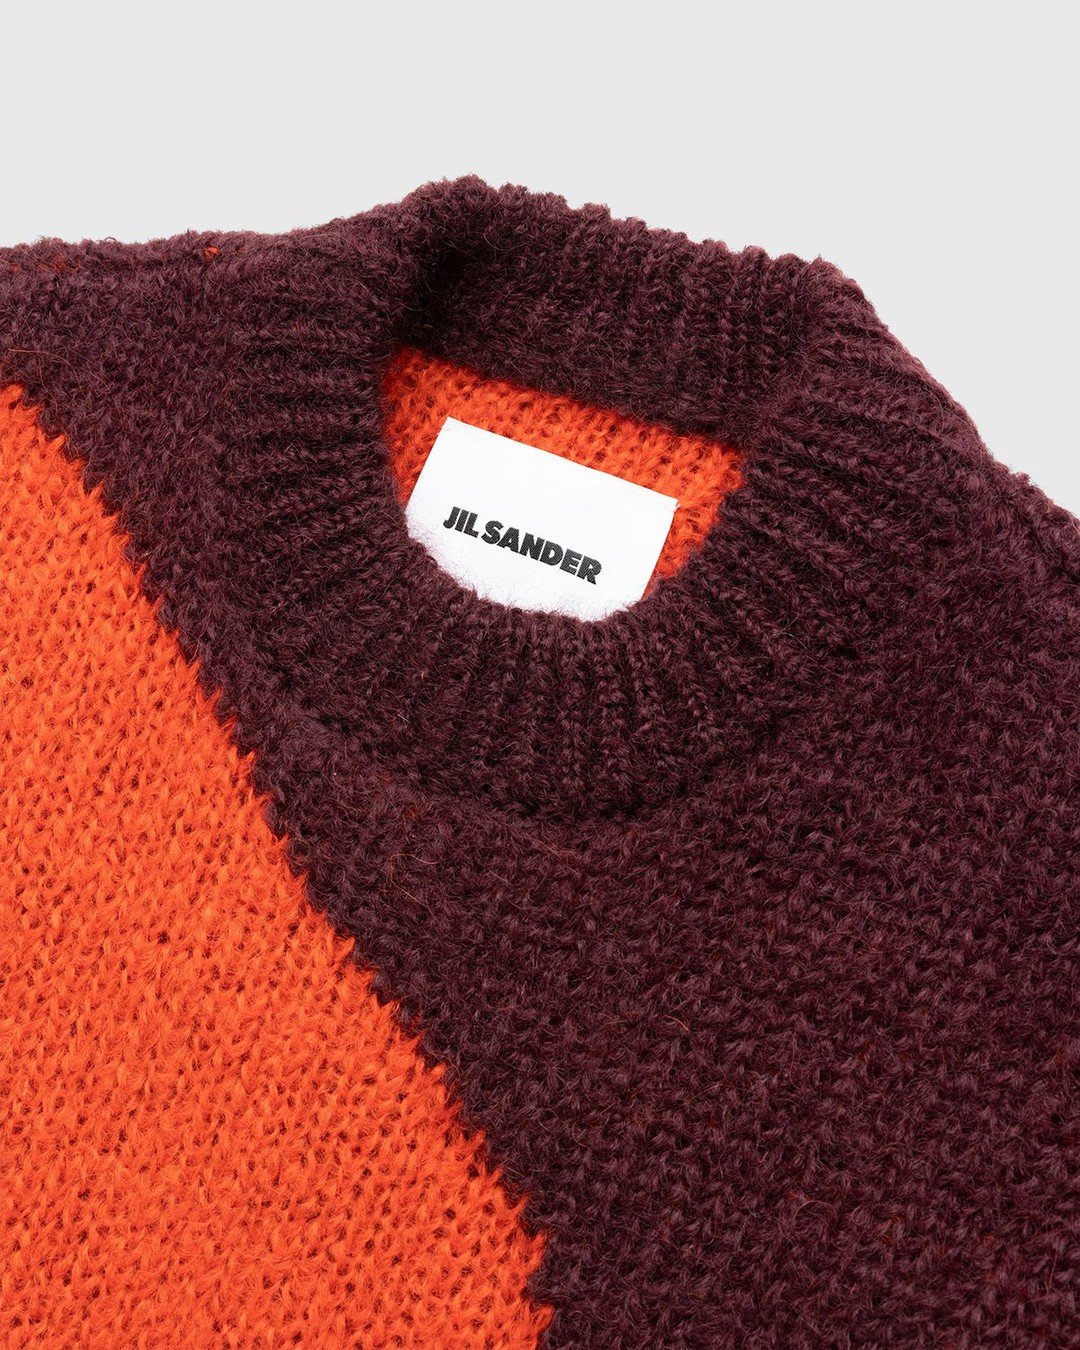 Jil Sander – Sweater Knitted Open Red - Knitwear - Red - Image 3